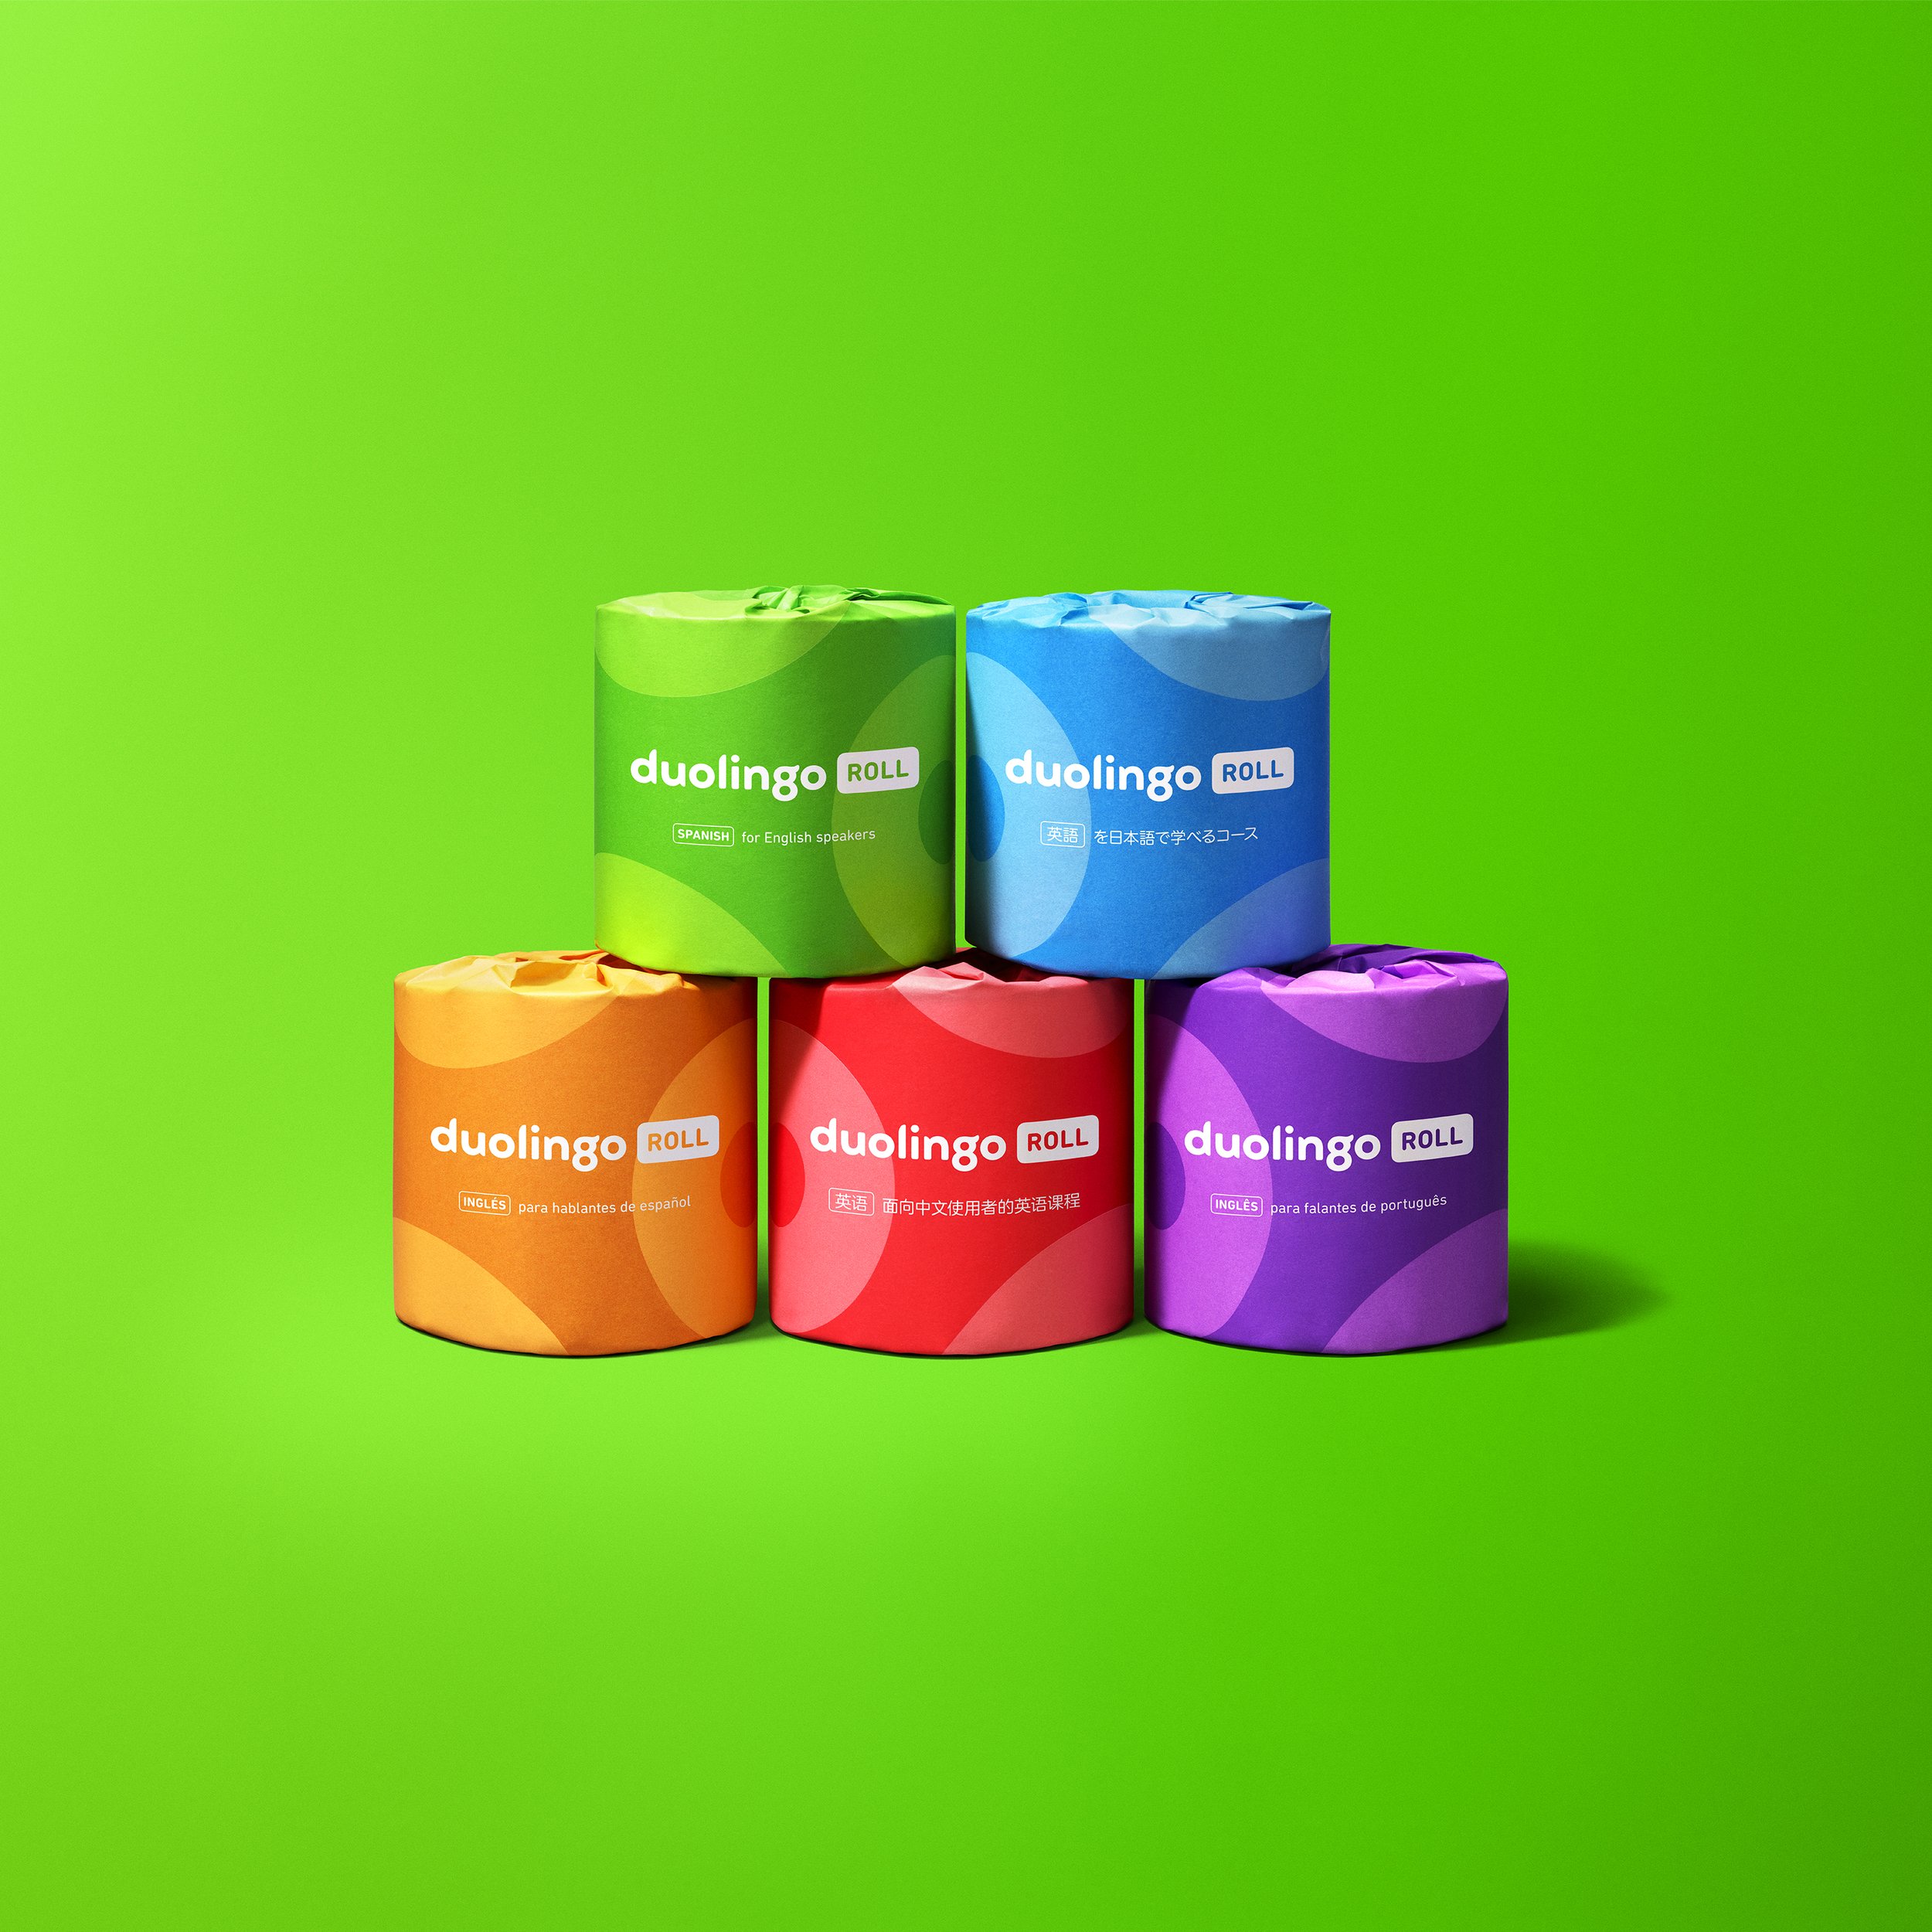 Duolingo_Roll_Family-Colors_Jack-Morgan-Design_3000x3000.jpeg